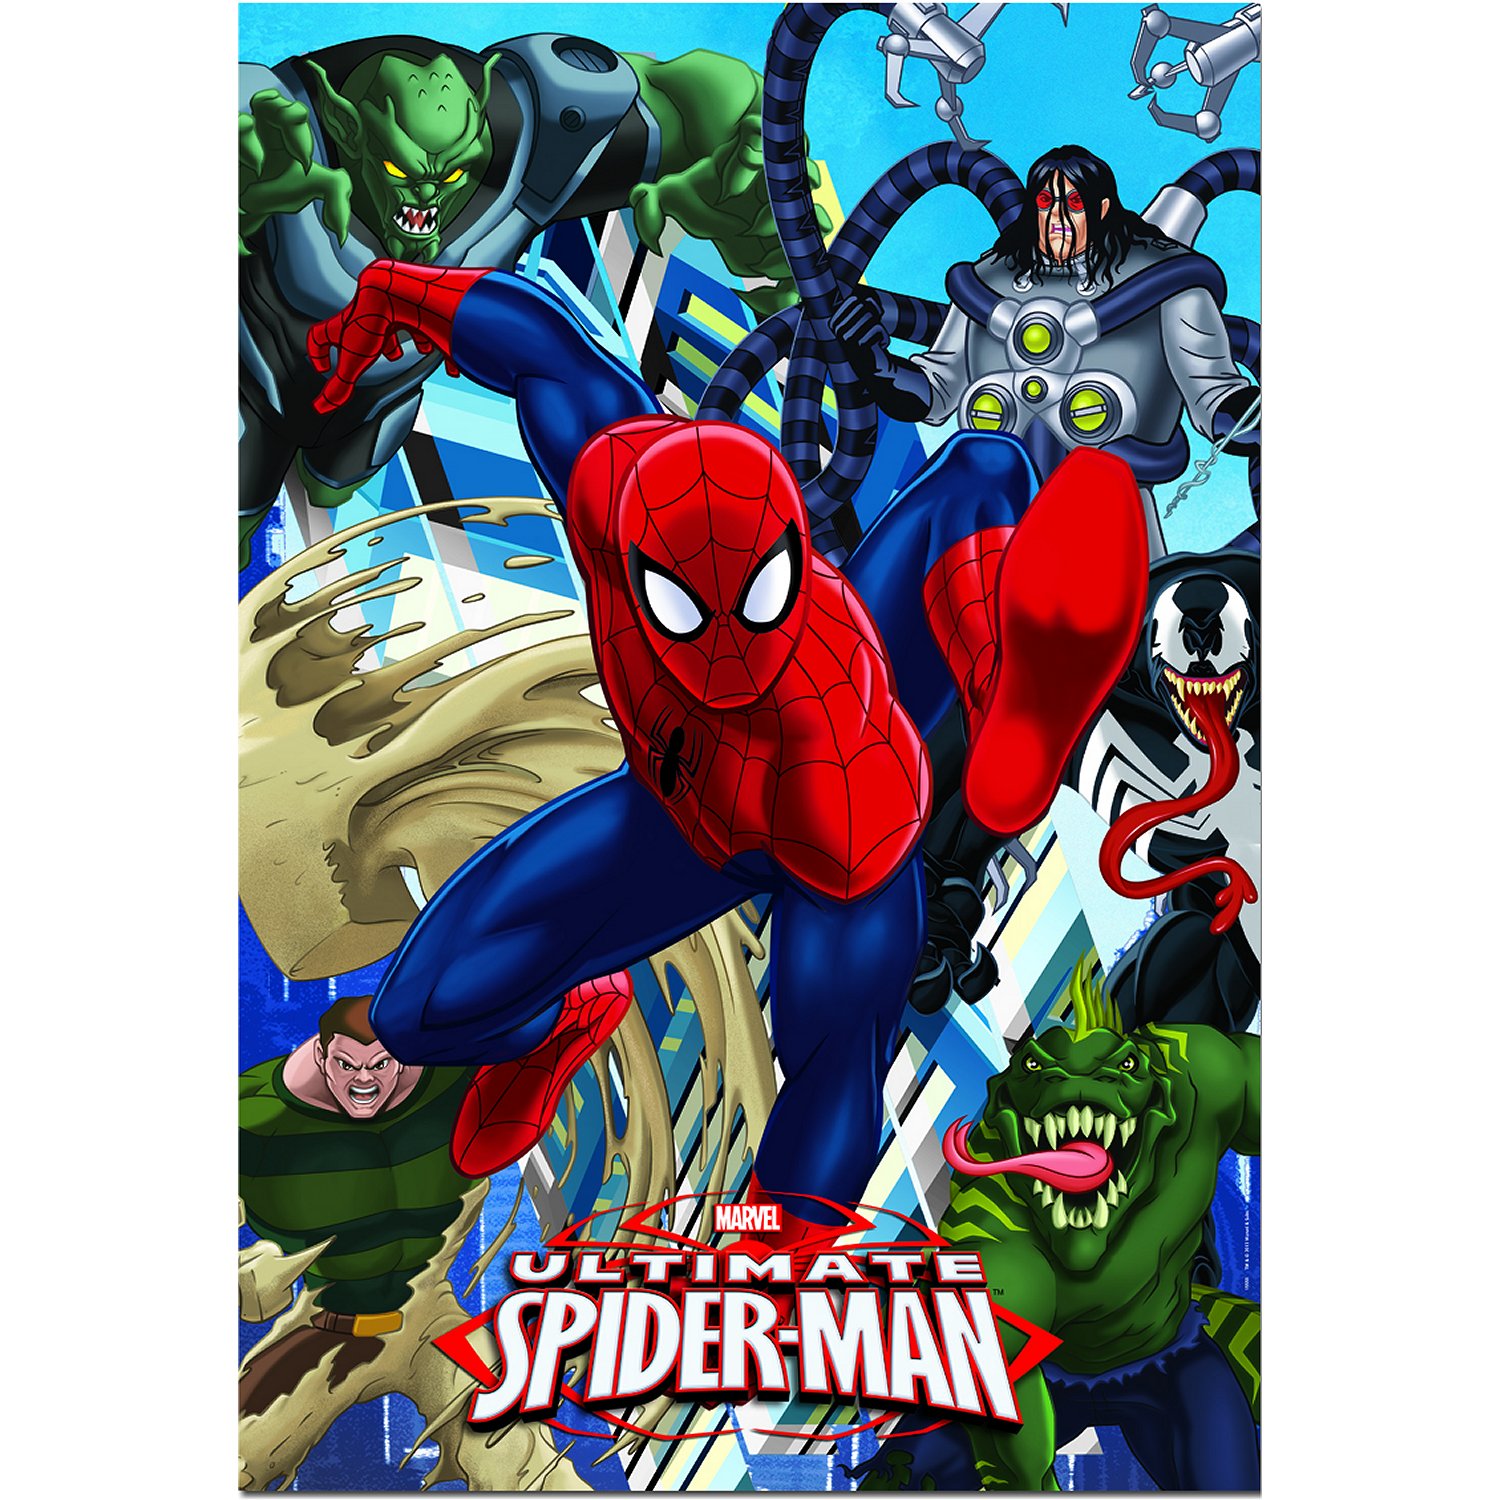 Puzzles 2 x 100 pièces : Spiderman - Educa - Rue des Puzzles